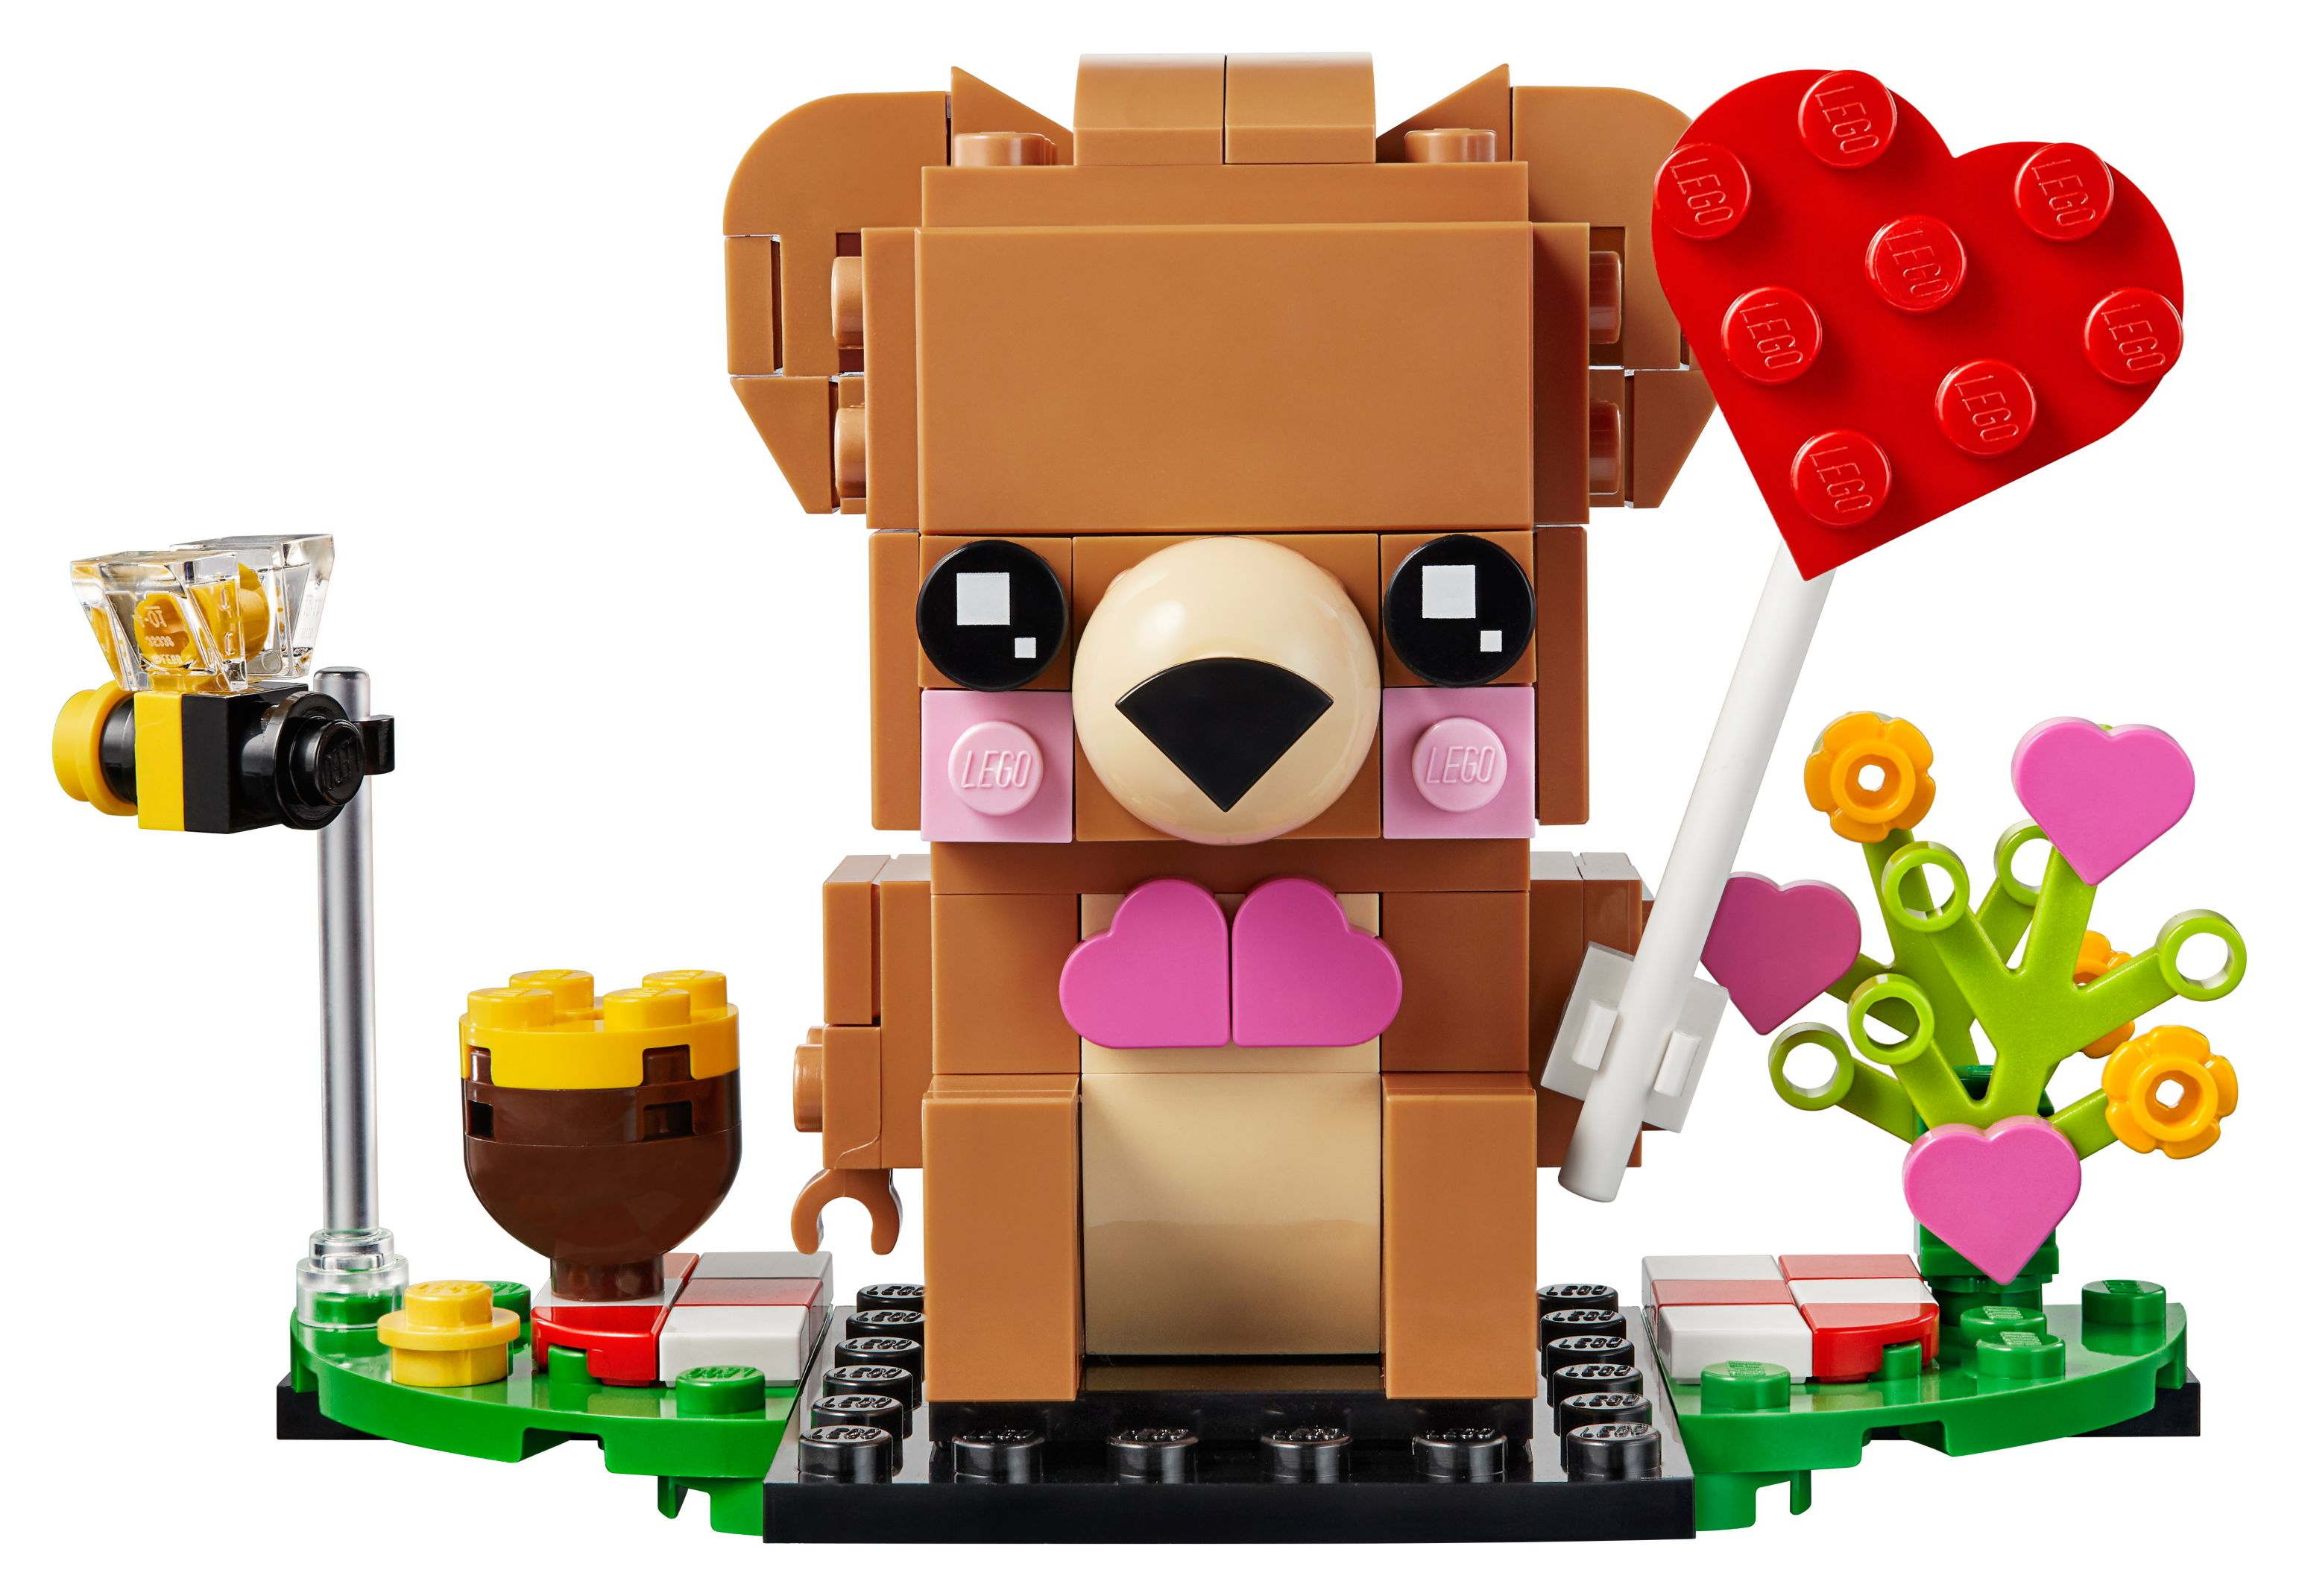 LEGO 40379 Brickheadz Bausatz Valentinstag-Bär